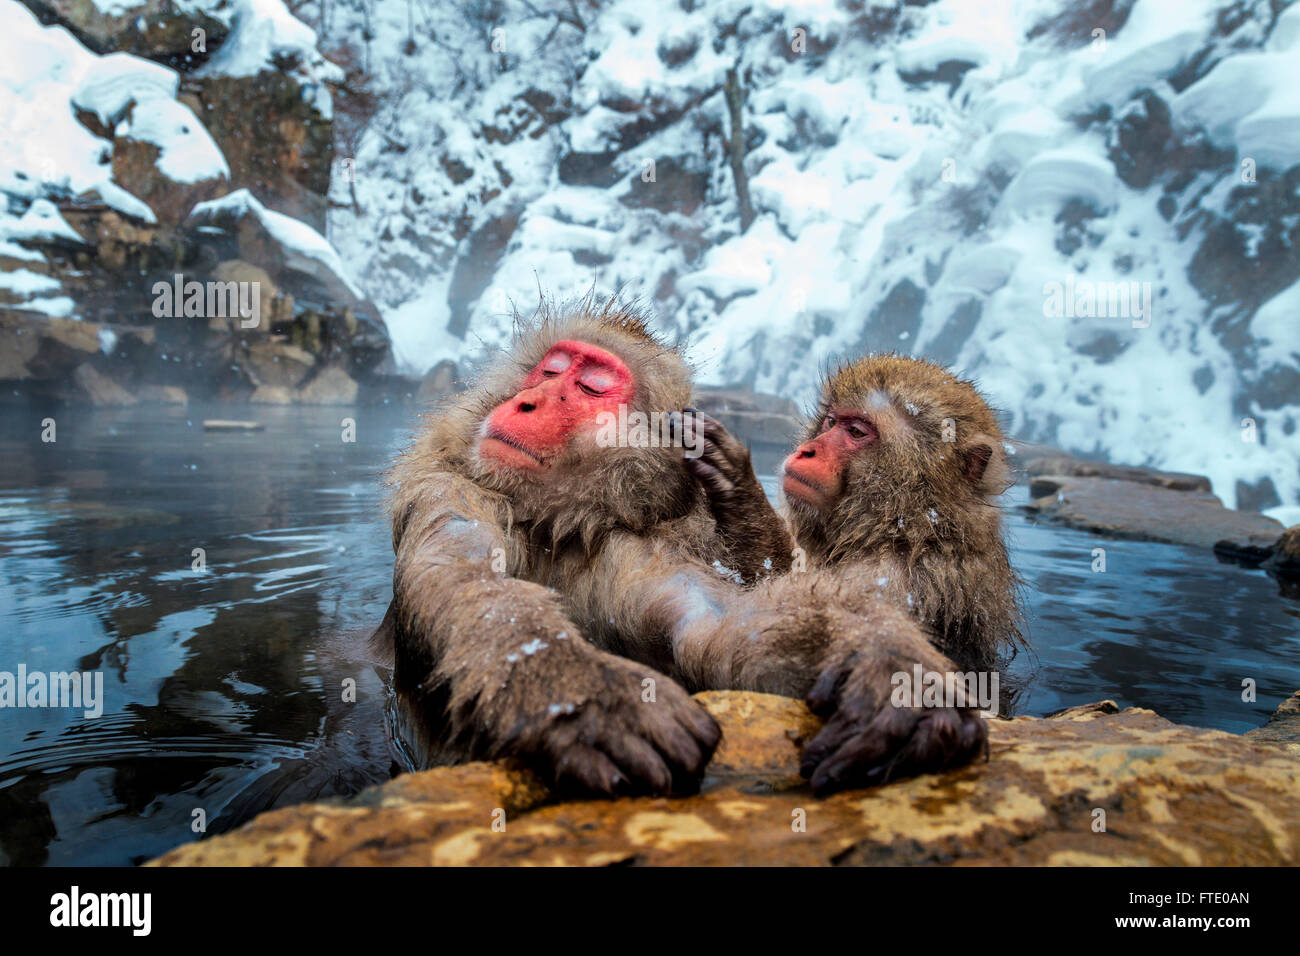 Snow monkeys grooming at Jigokudani's hot spring, Japan. Stock Photo